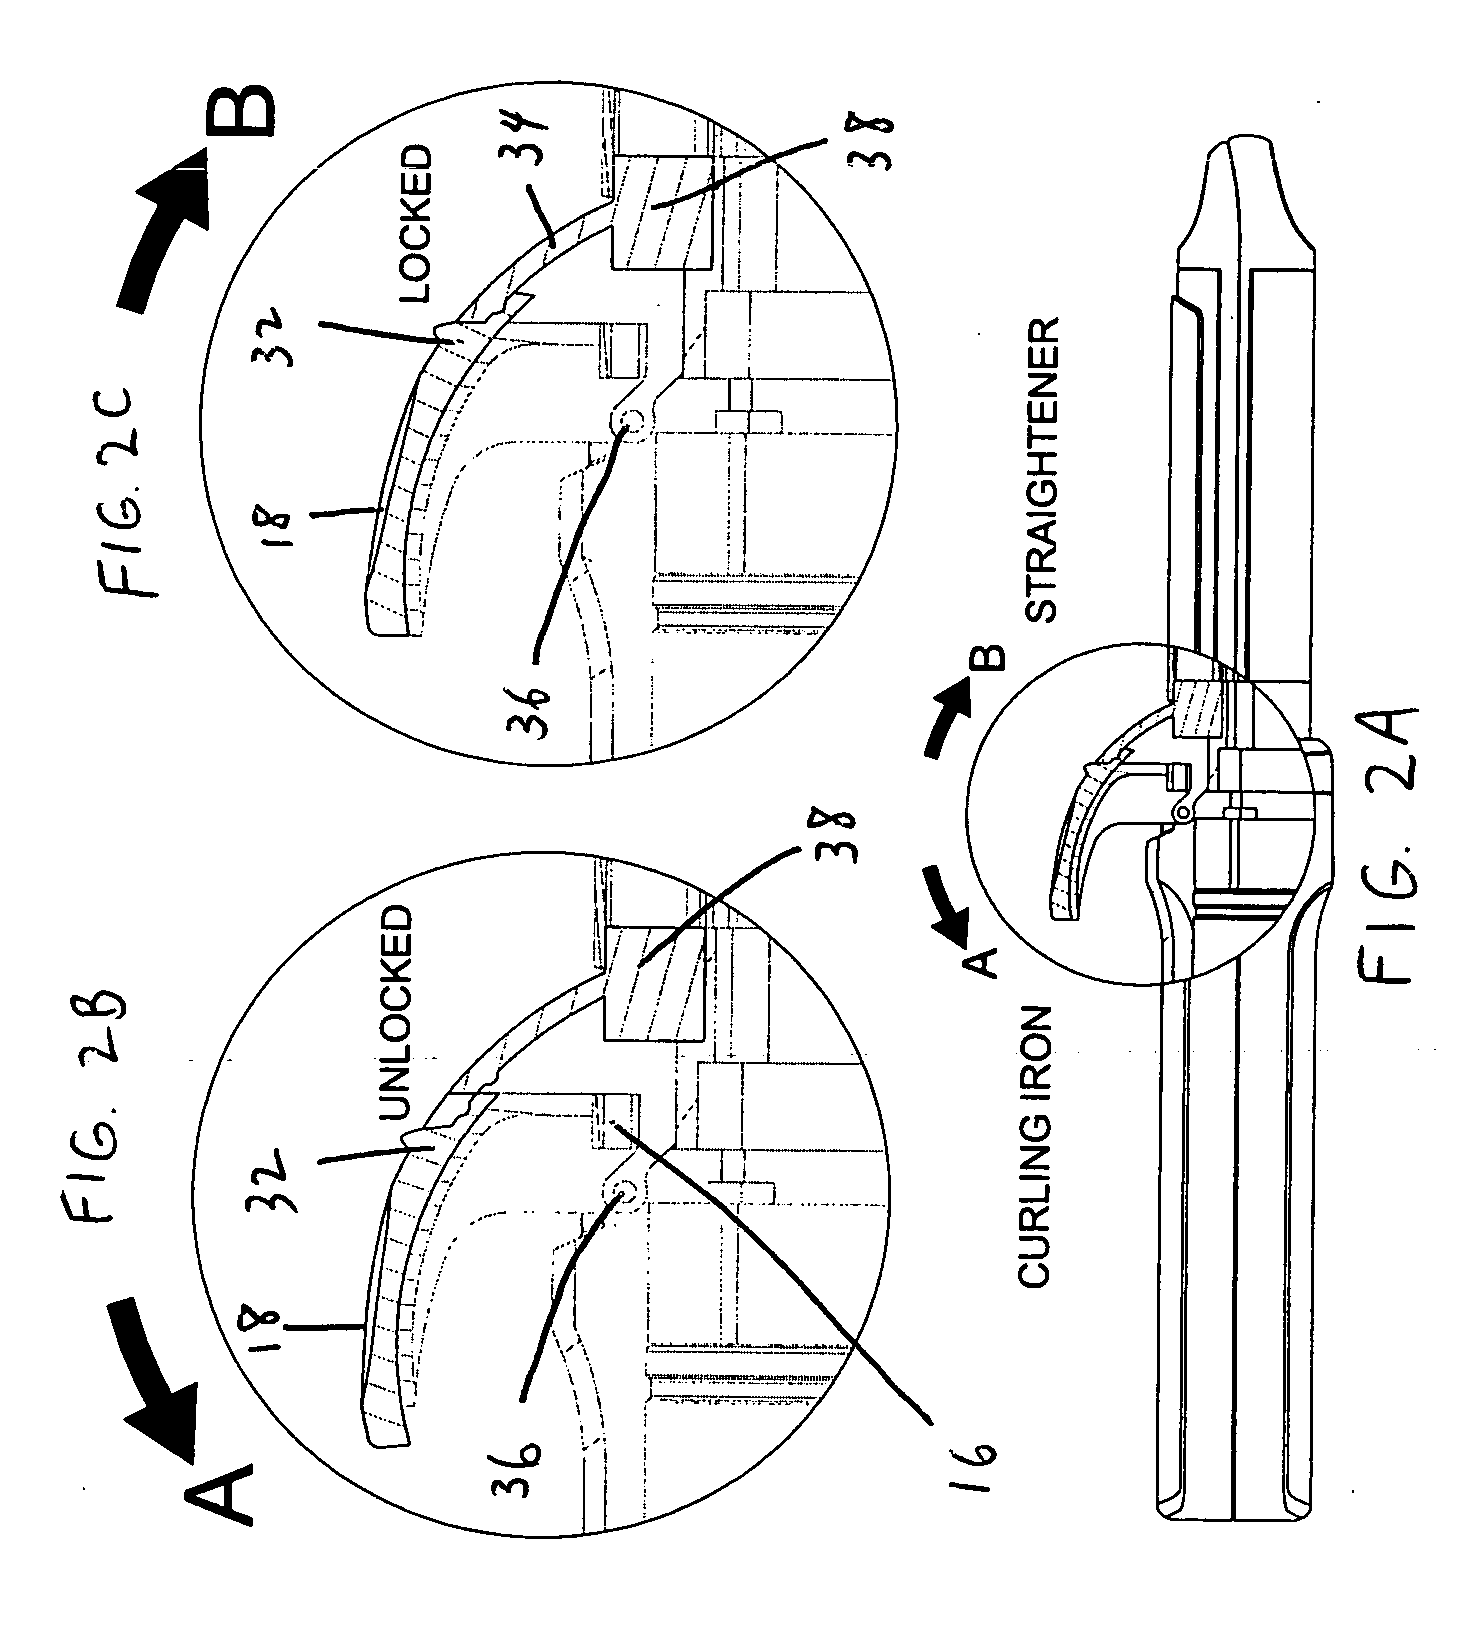 Split-barrel locking mechanism for hair appliance